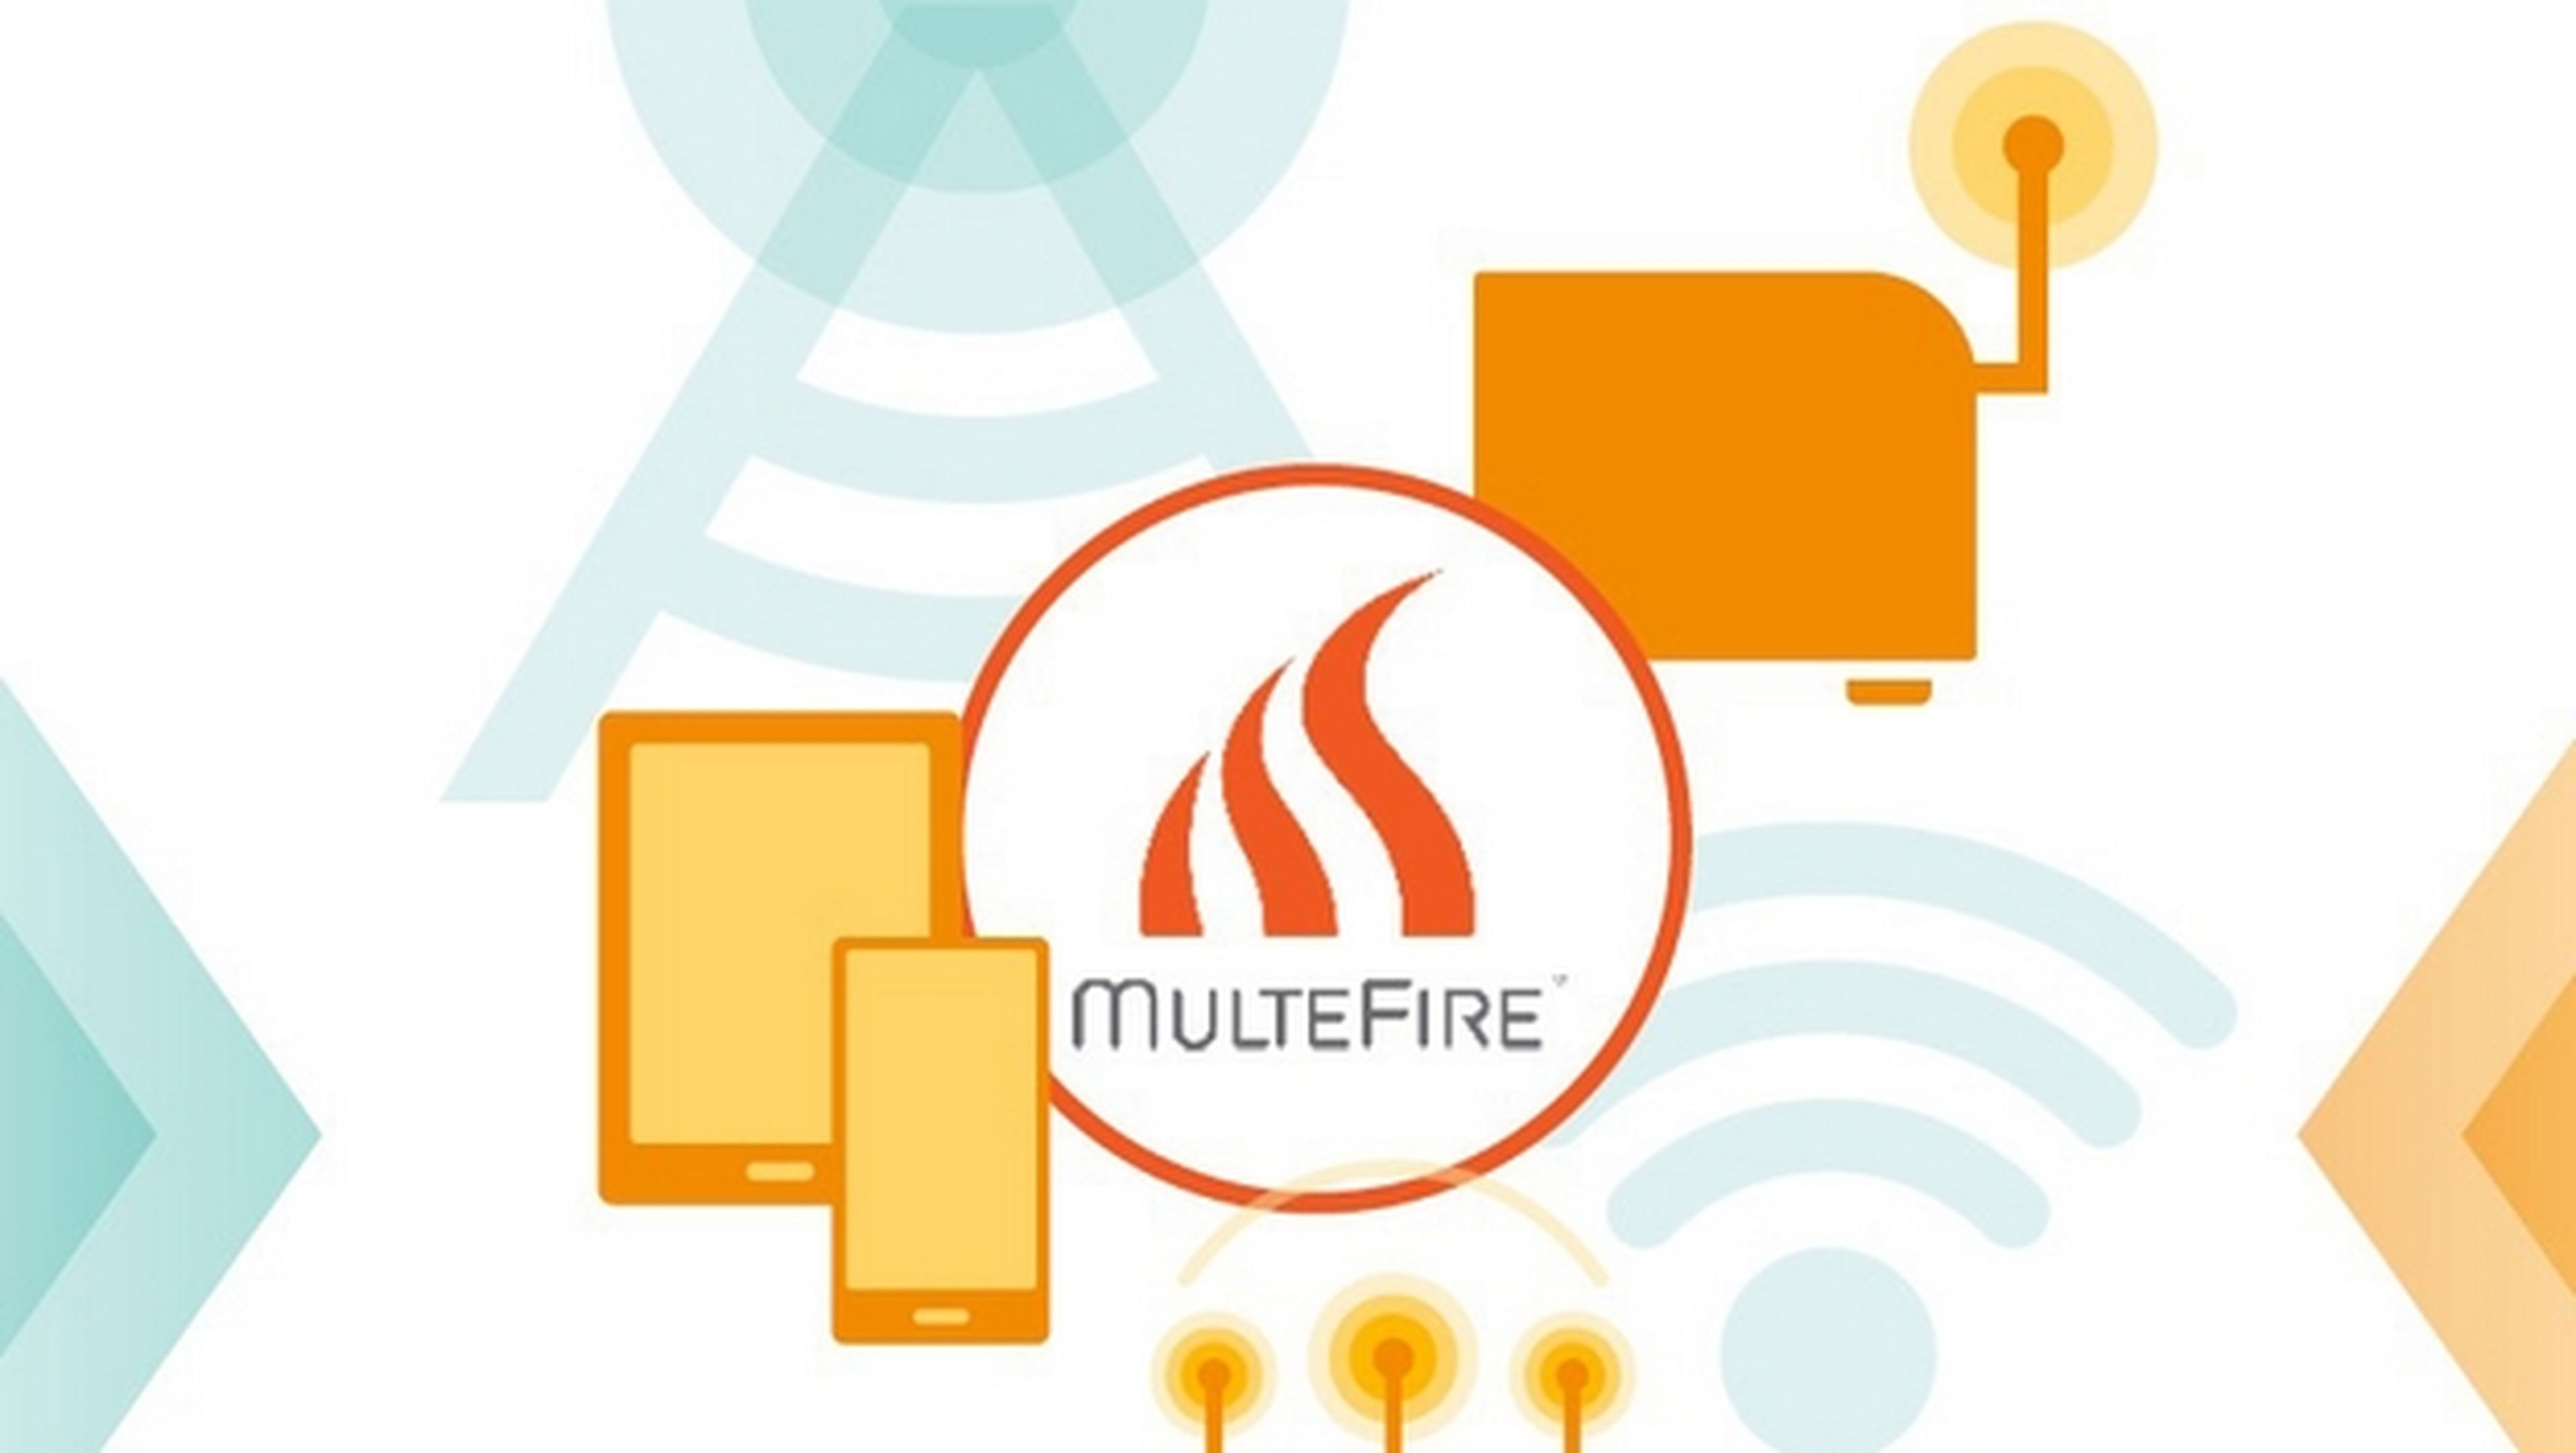 MulteFire te permitirá montar tu propia red 4G LTE a través de WiFi